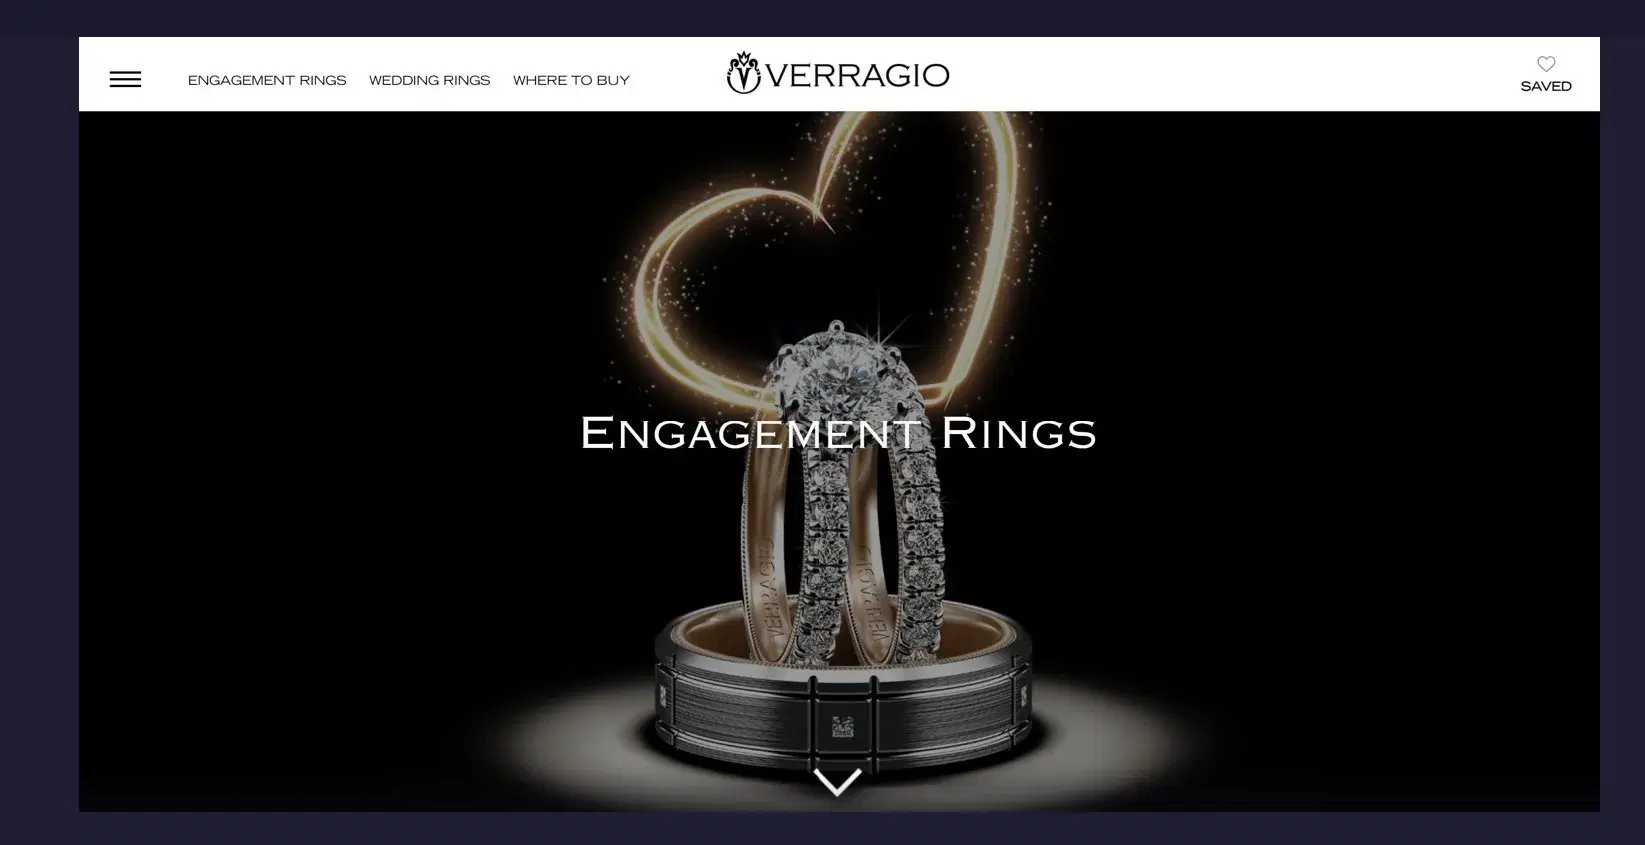 Verragio Engagement Rings: Worth the Price?